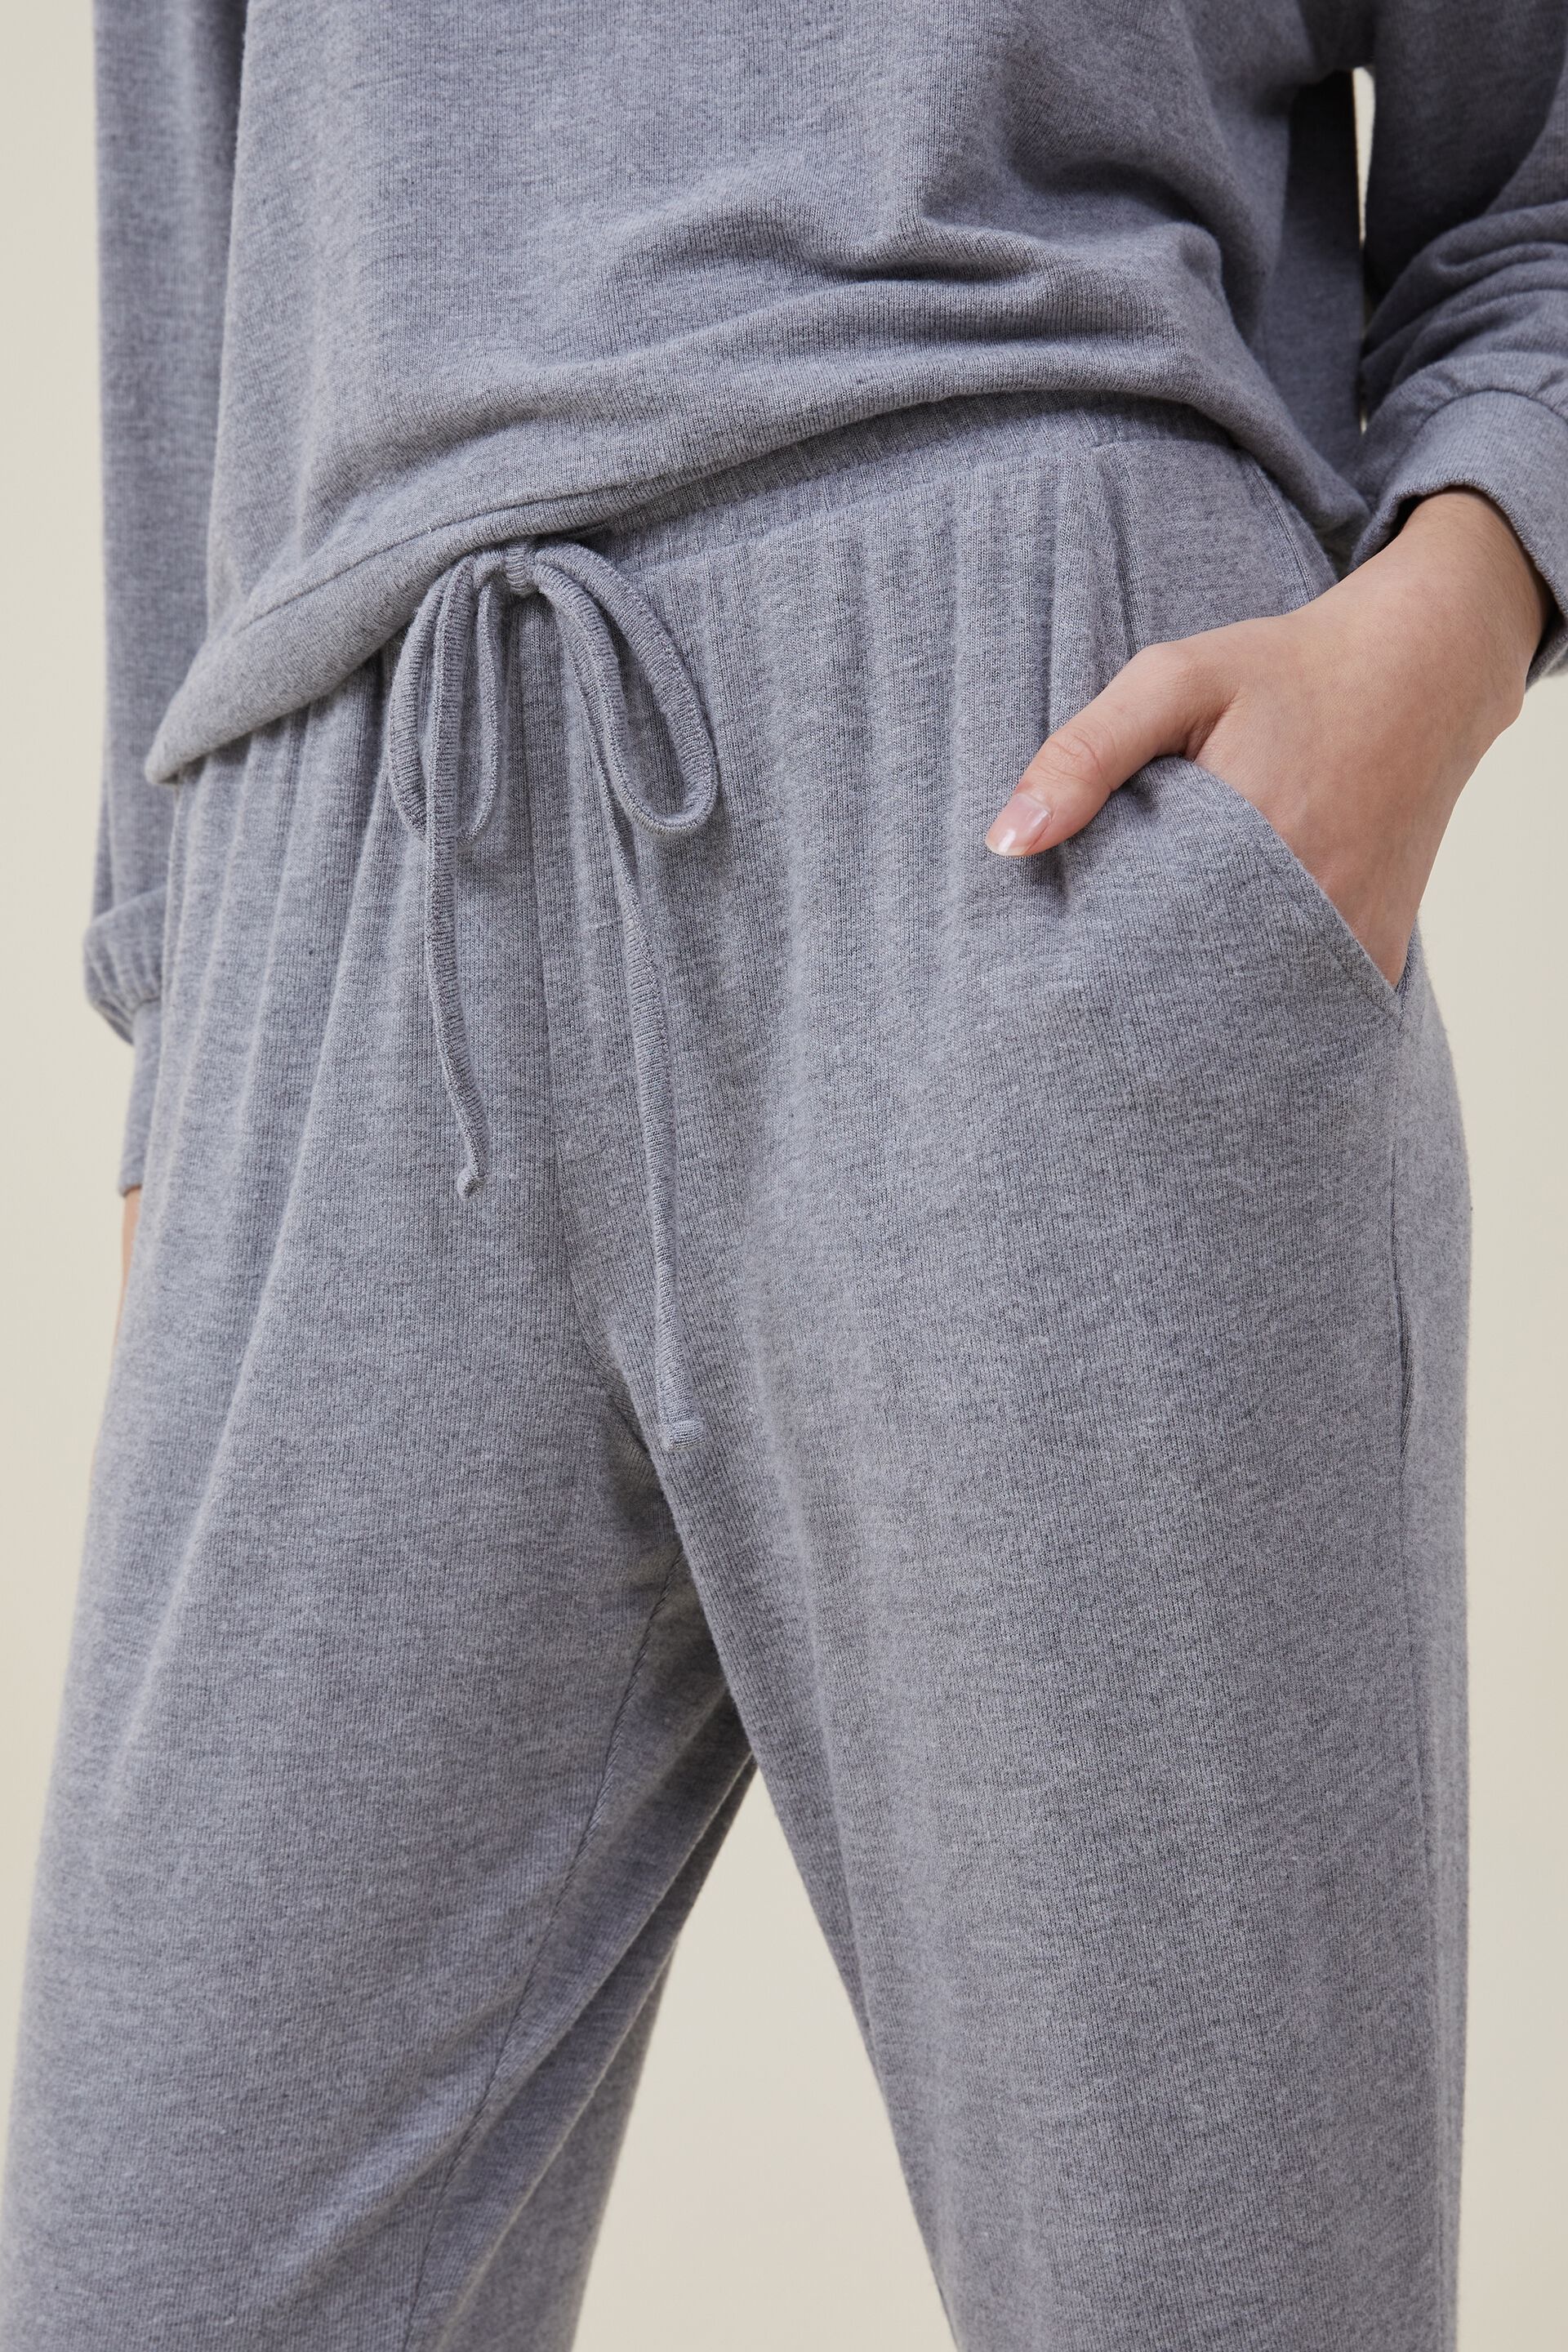 La Vie en Rose Super Soft Pyjama Pants | Kingsway Mall